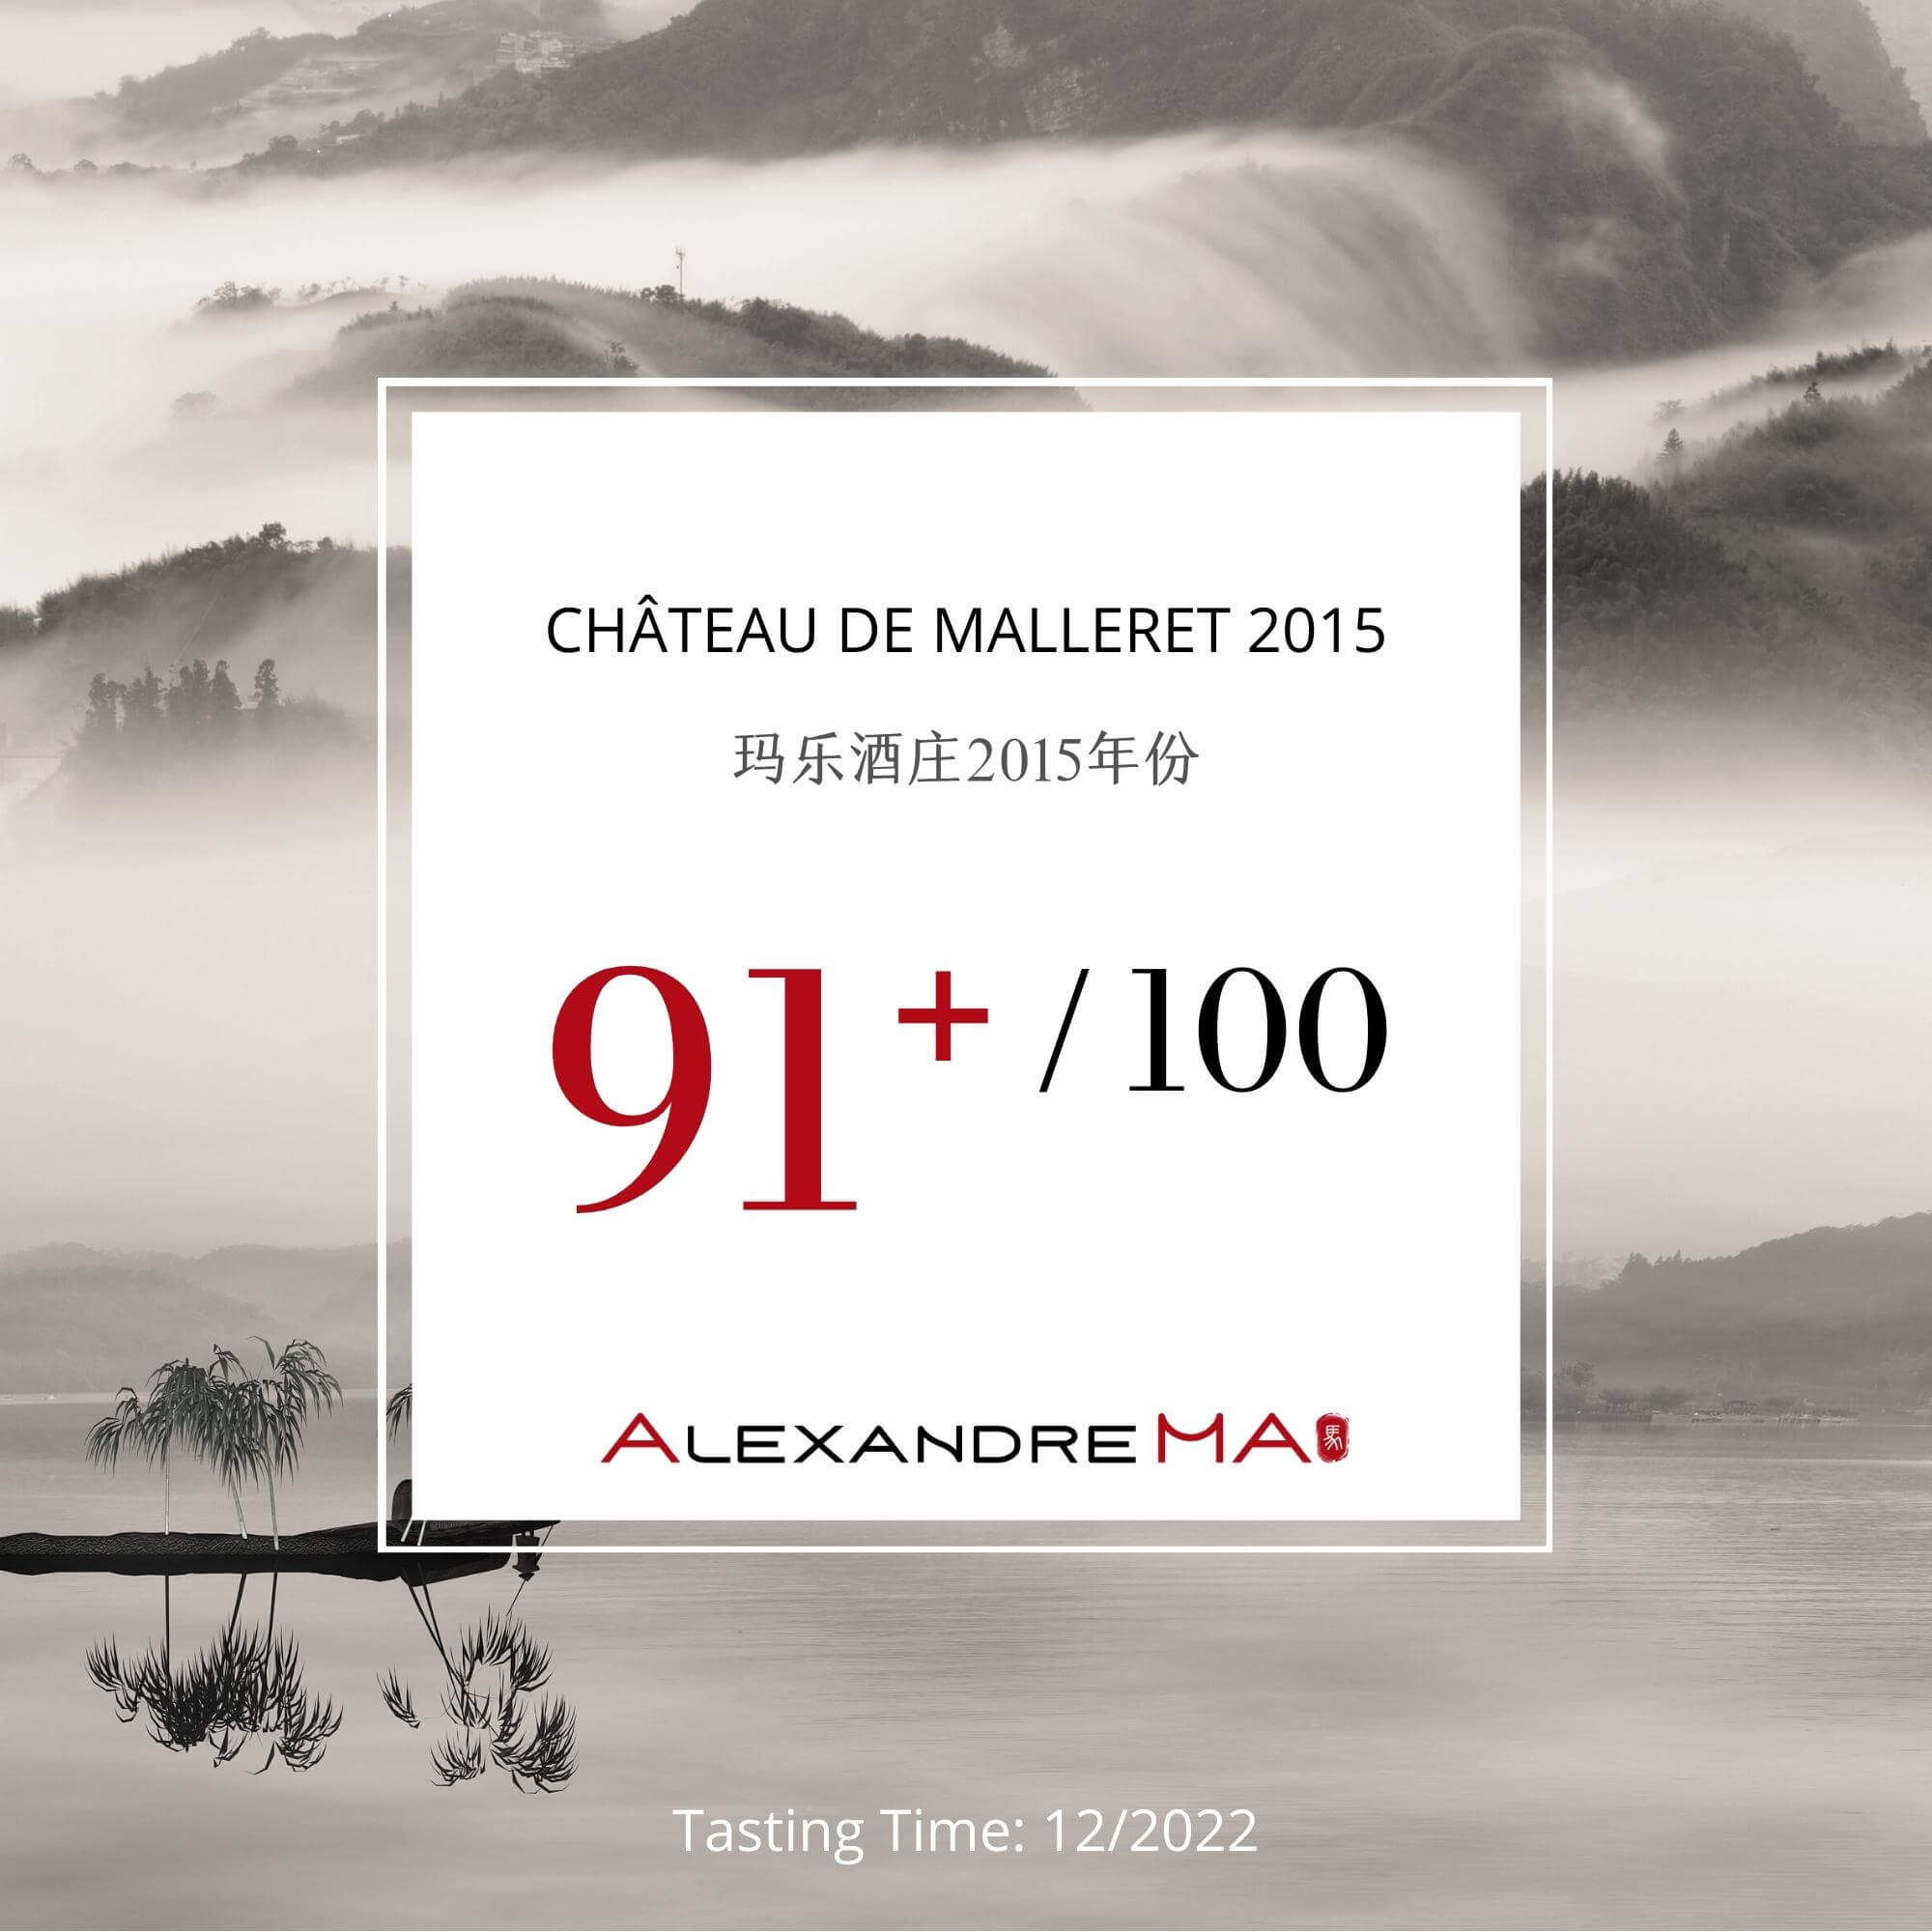 Château de Malleret 2015 - Alexandre MA